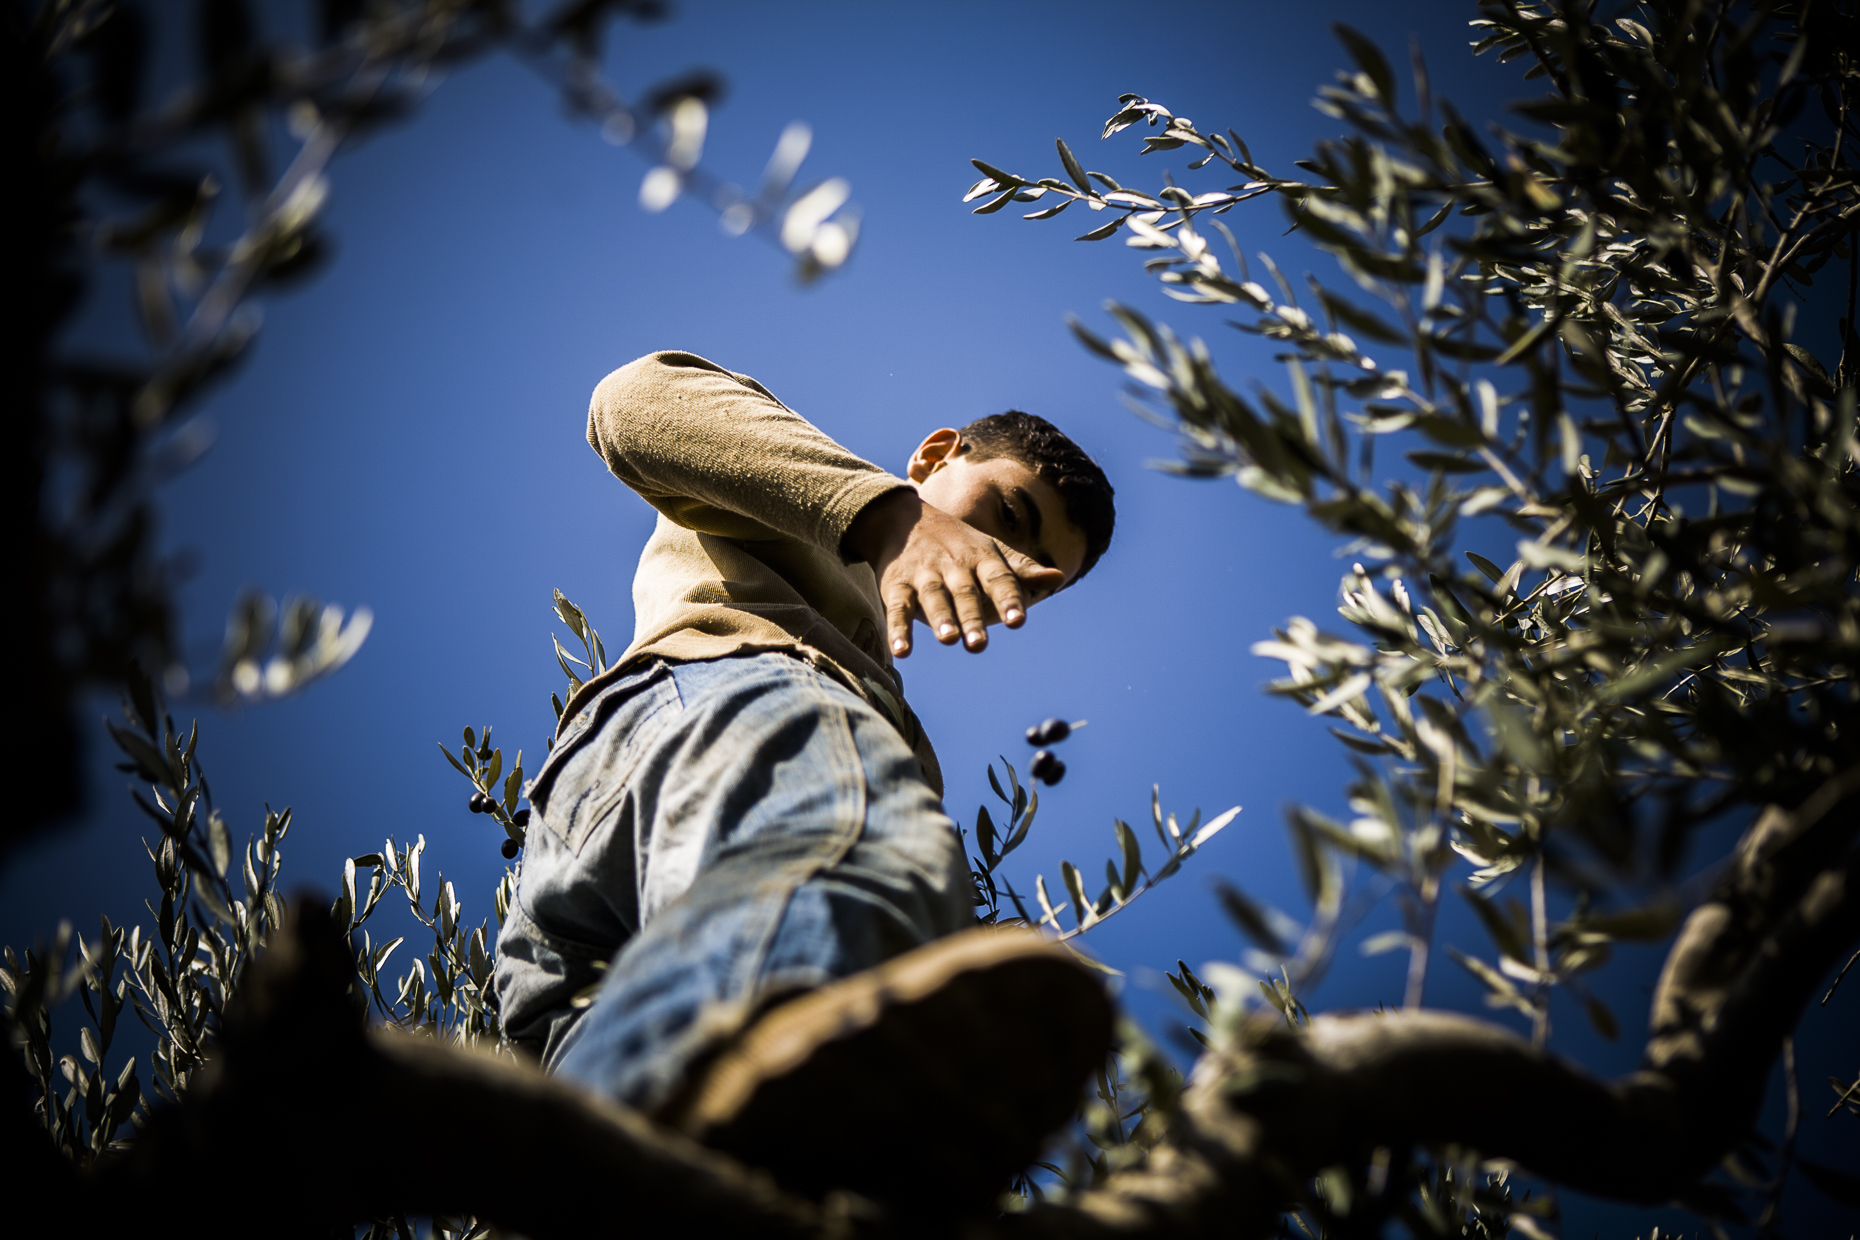 Olive farmer, West Bank